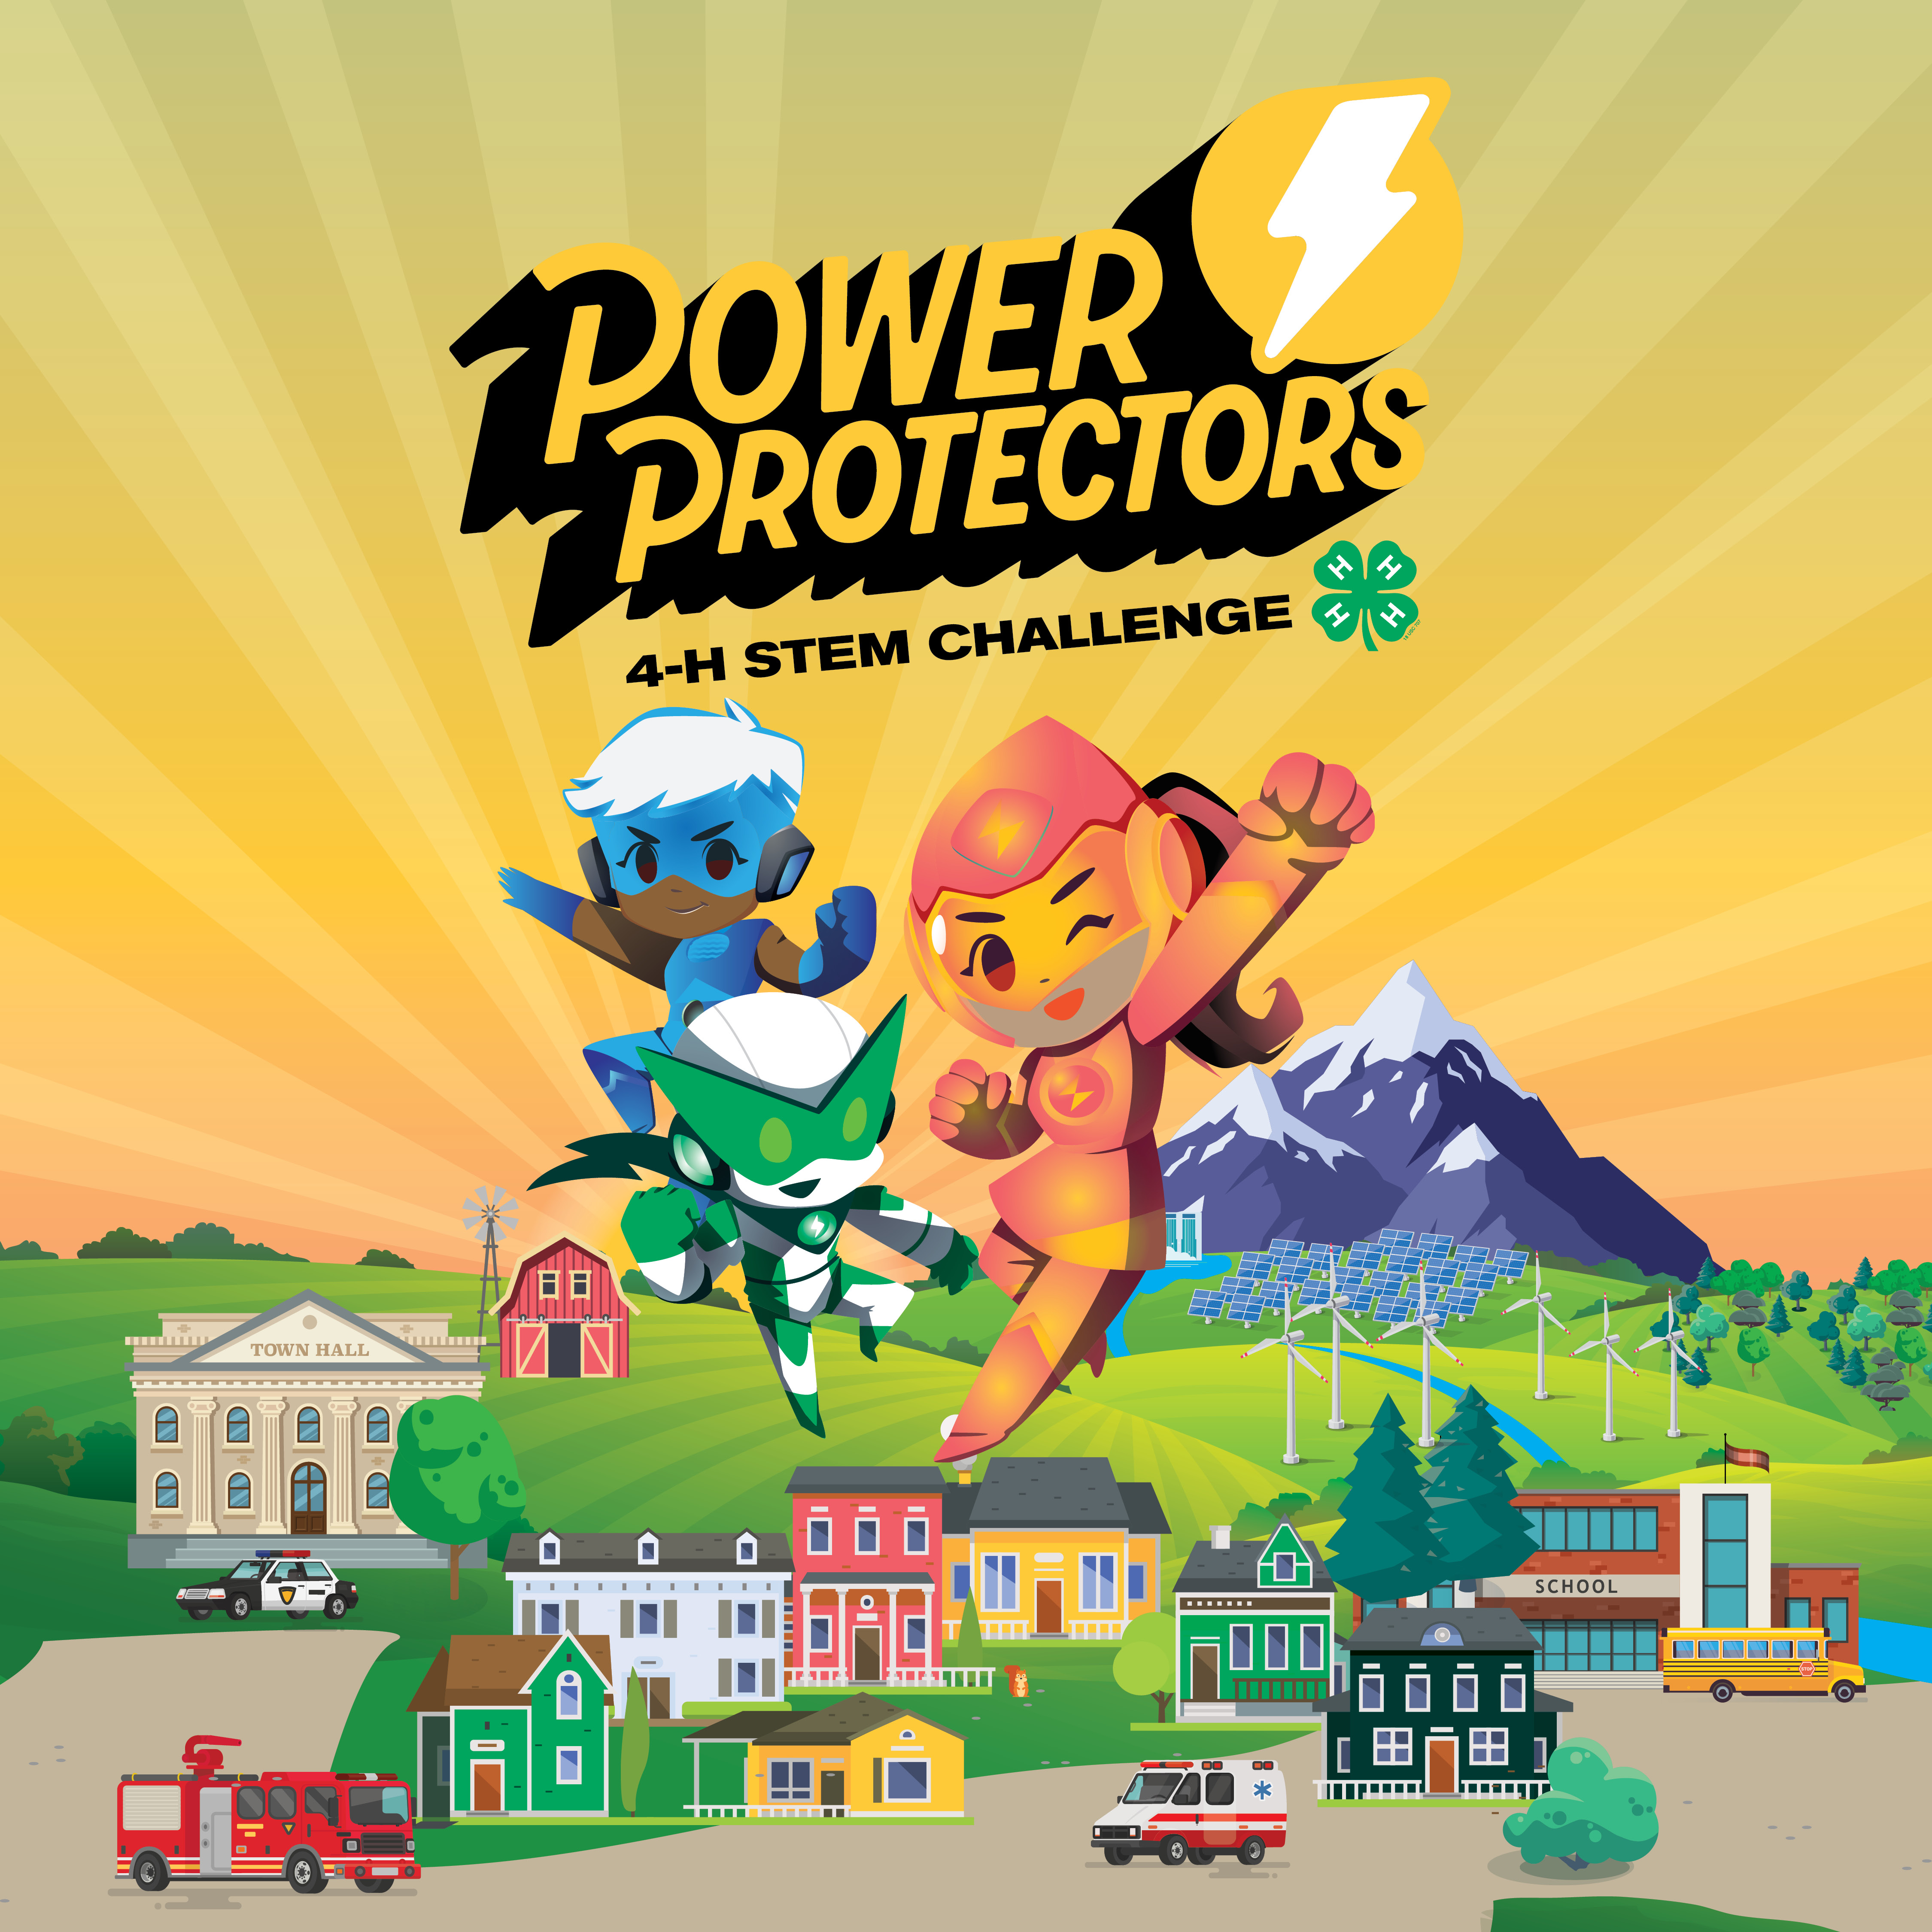 Power Protectors 4-H STEM Challenge